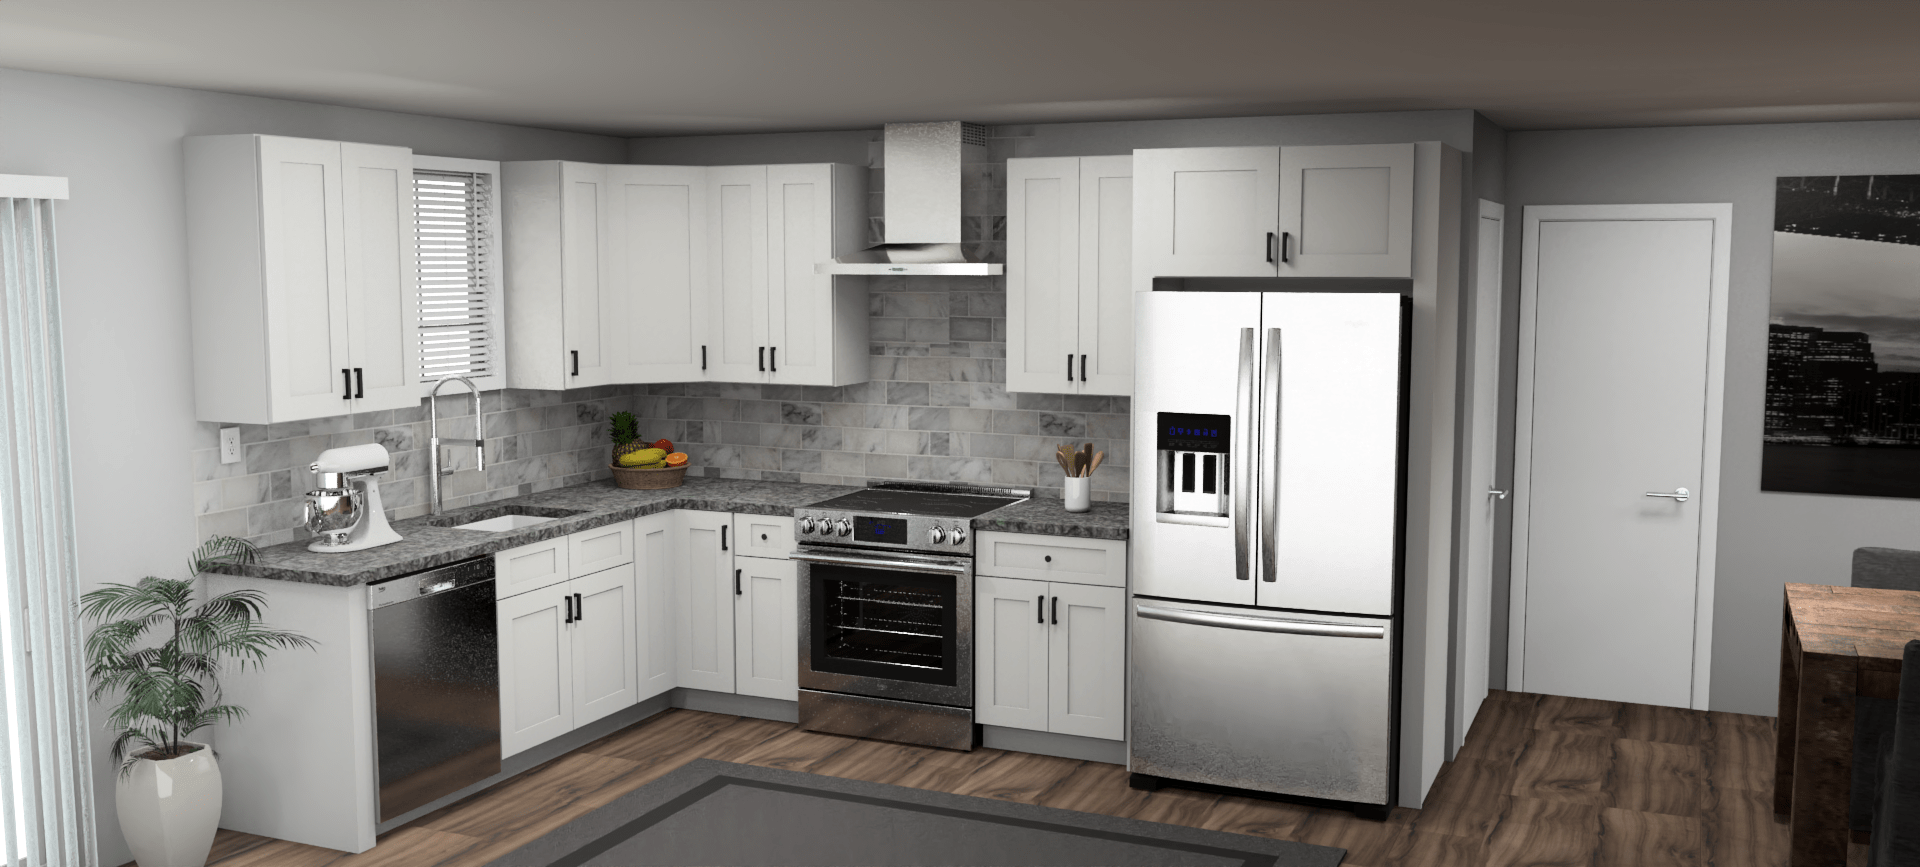 Fabuwood Allure Galaxy Frost 8 x 12 L Shaped Kitchen Main Layout Photo